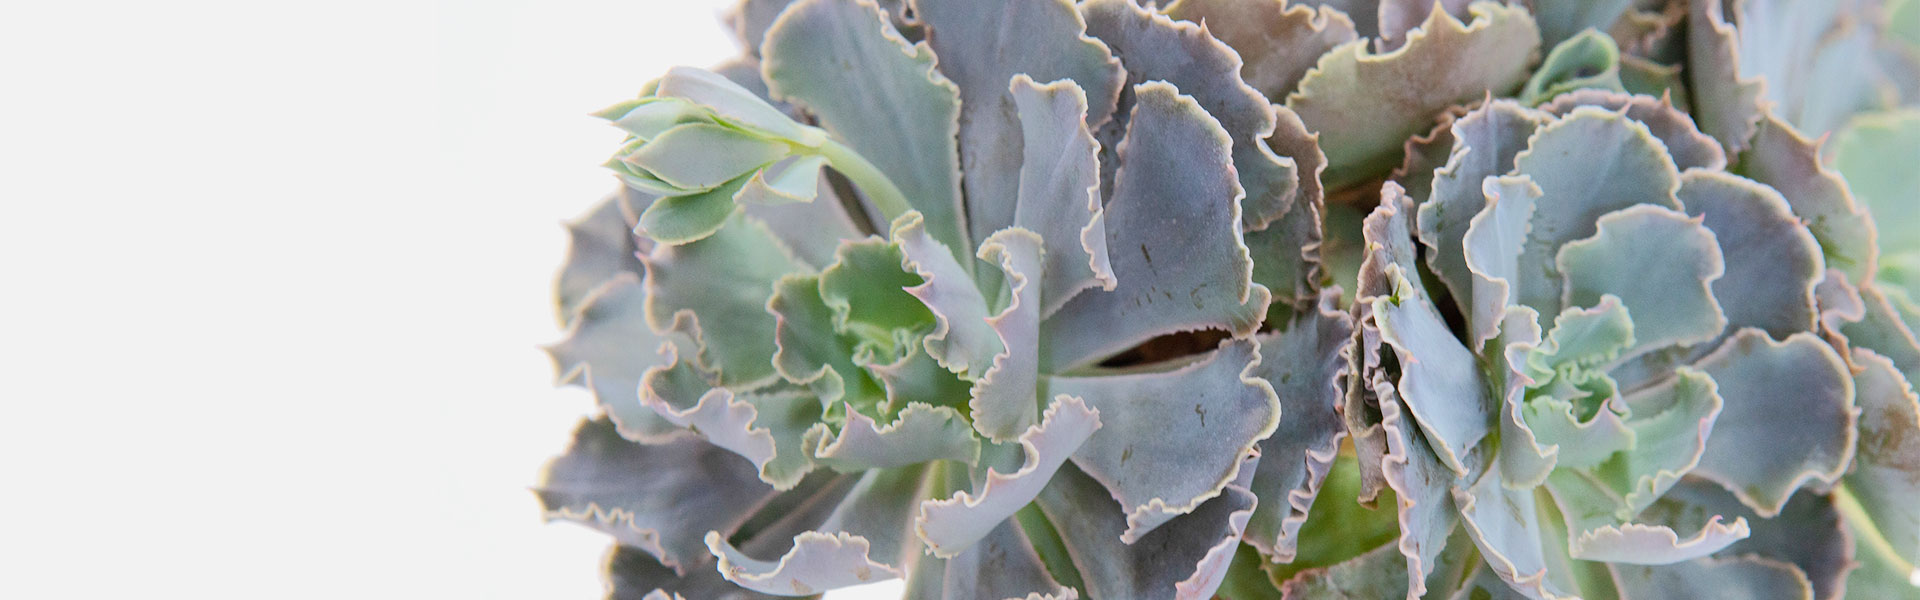 Nurture Your Nature: Succulents